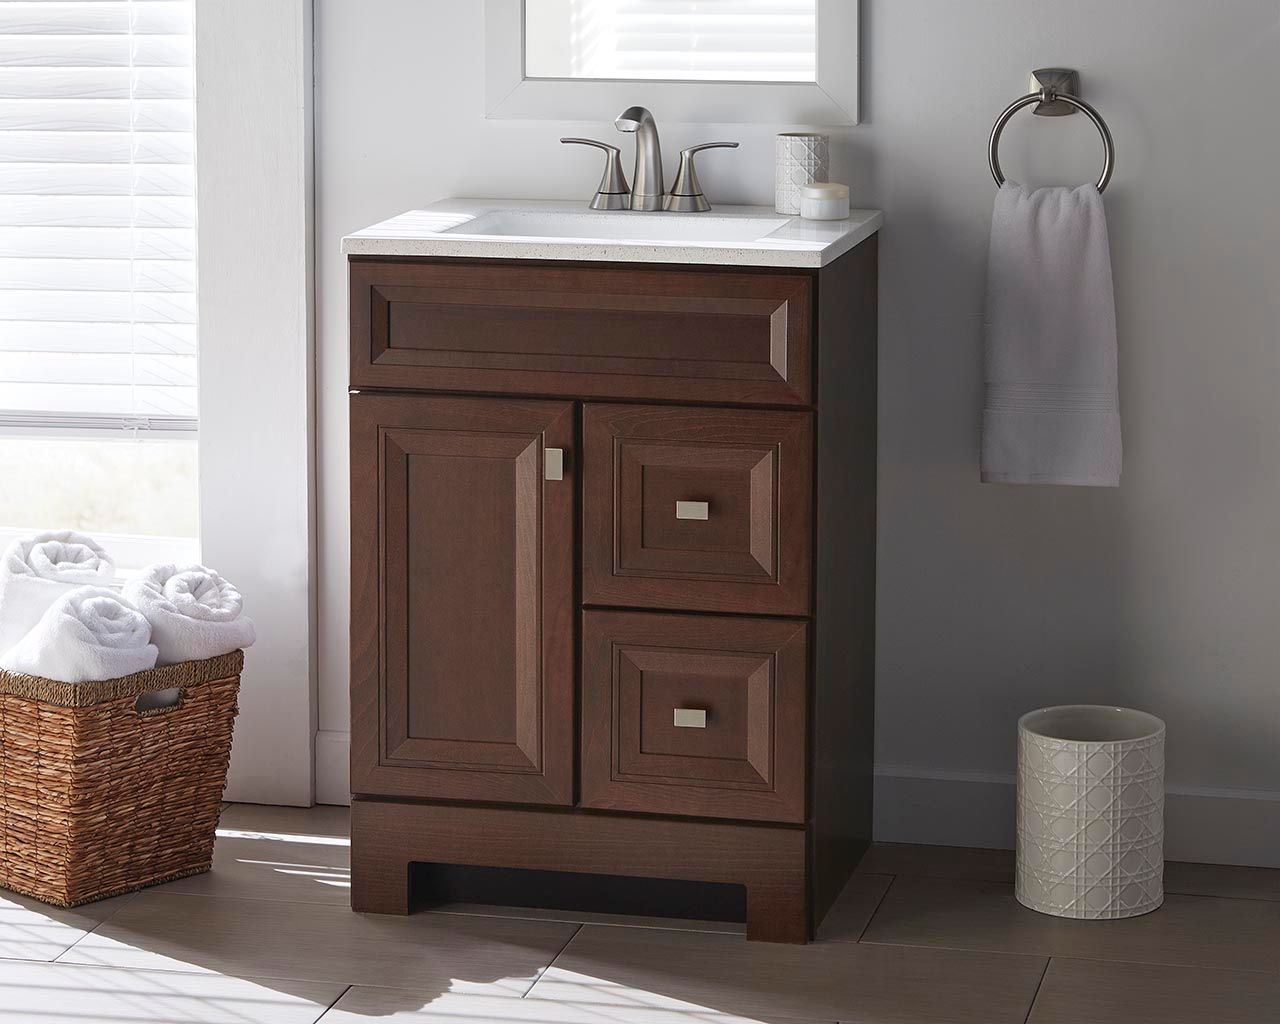 Introducing the Sedgewood Vanity Combo: Stylish and Functional Bathroom Addition